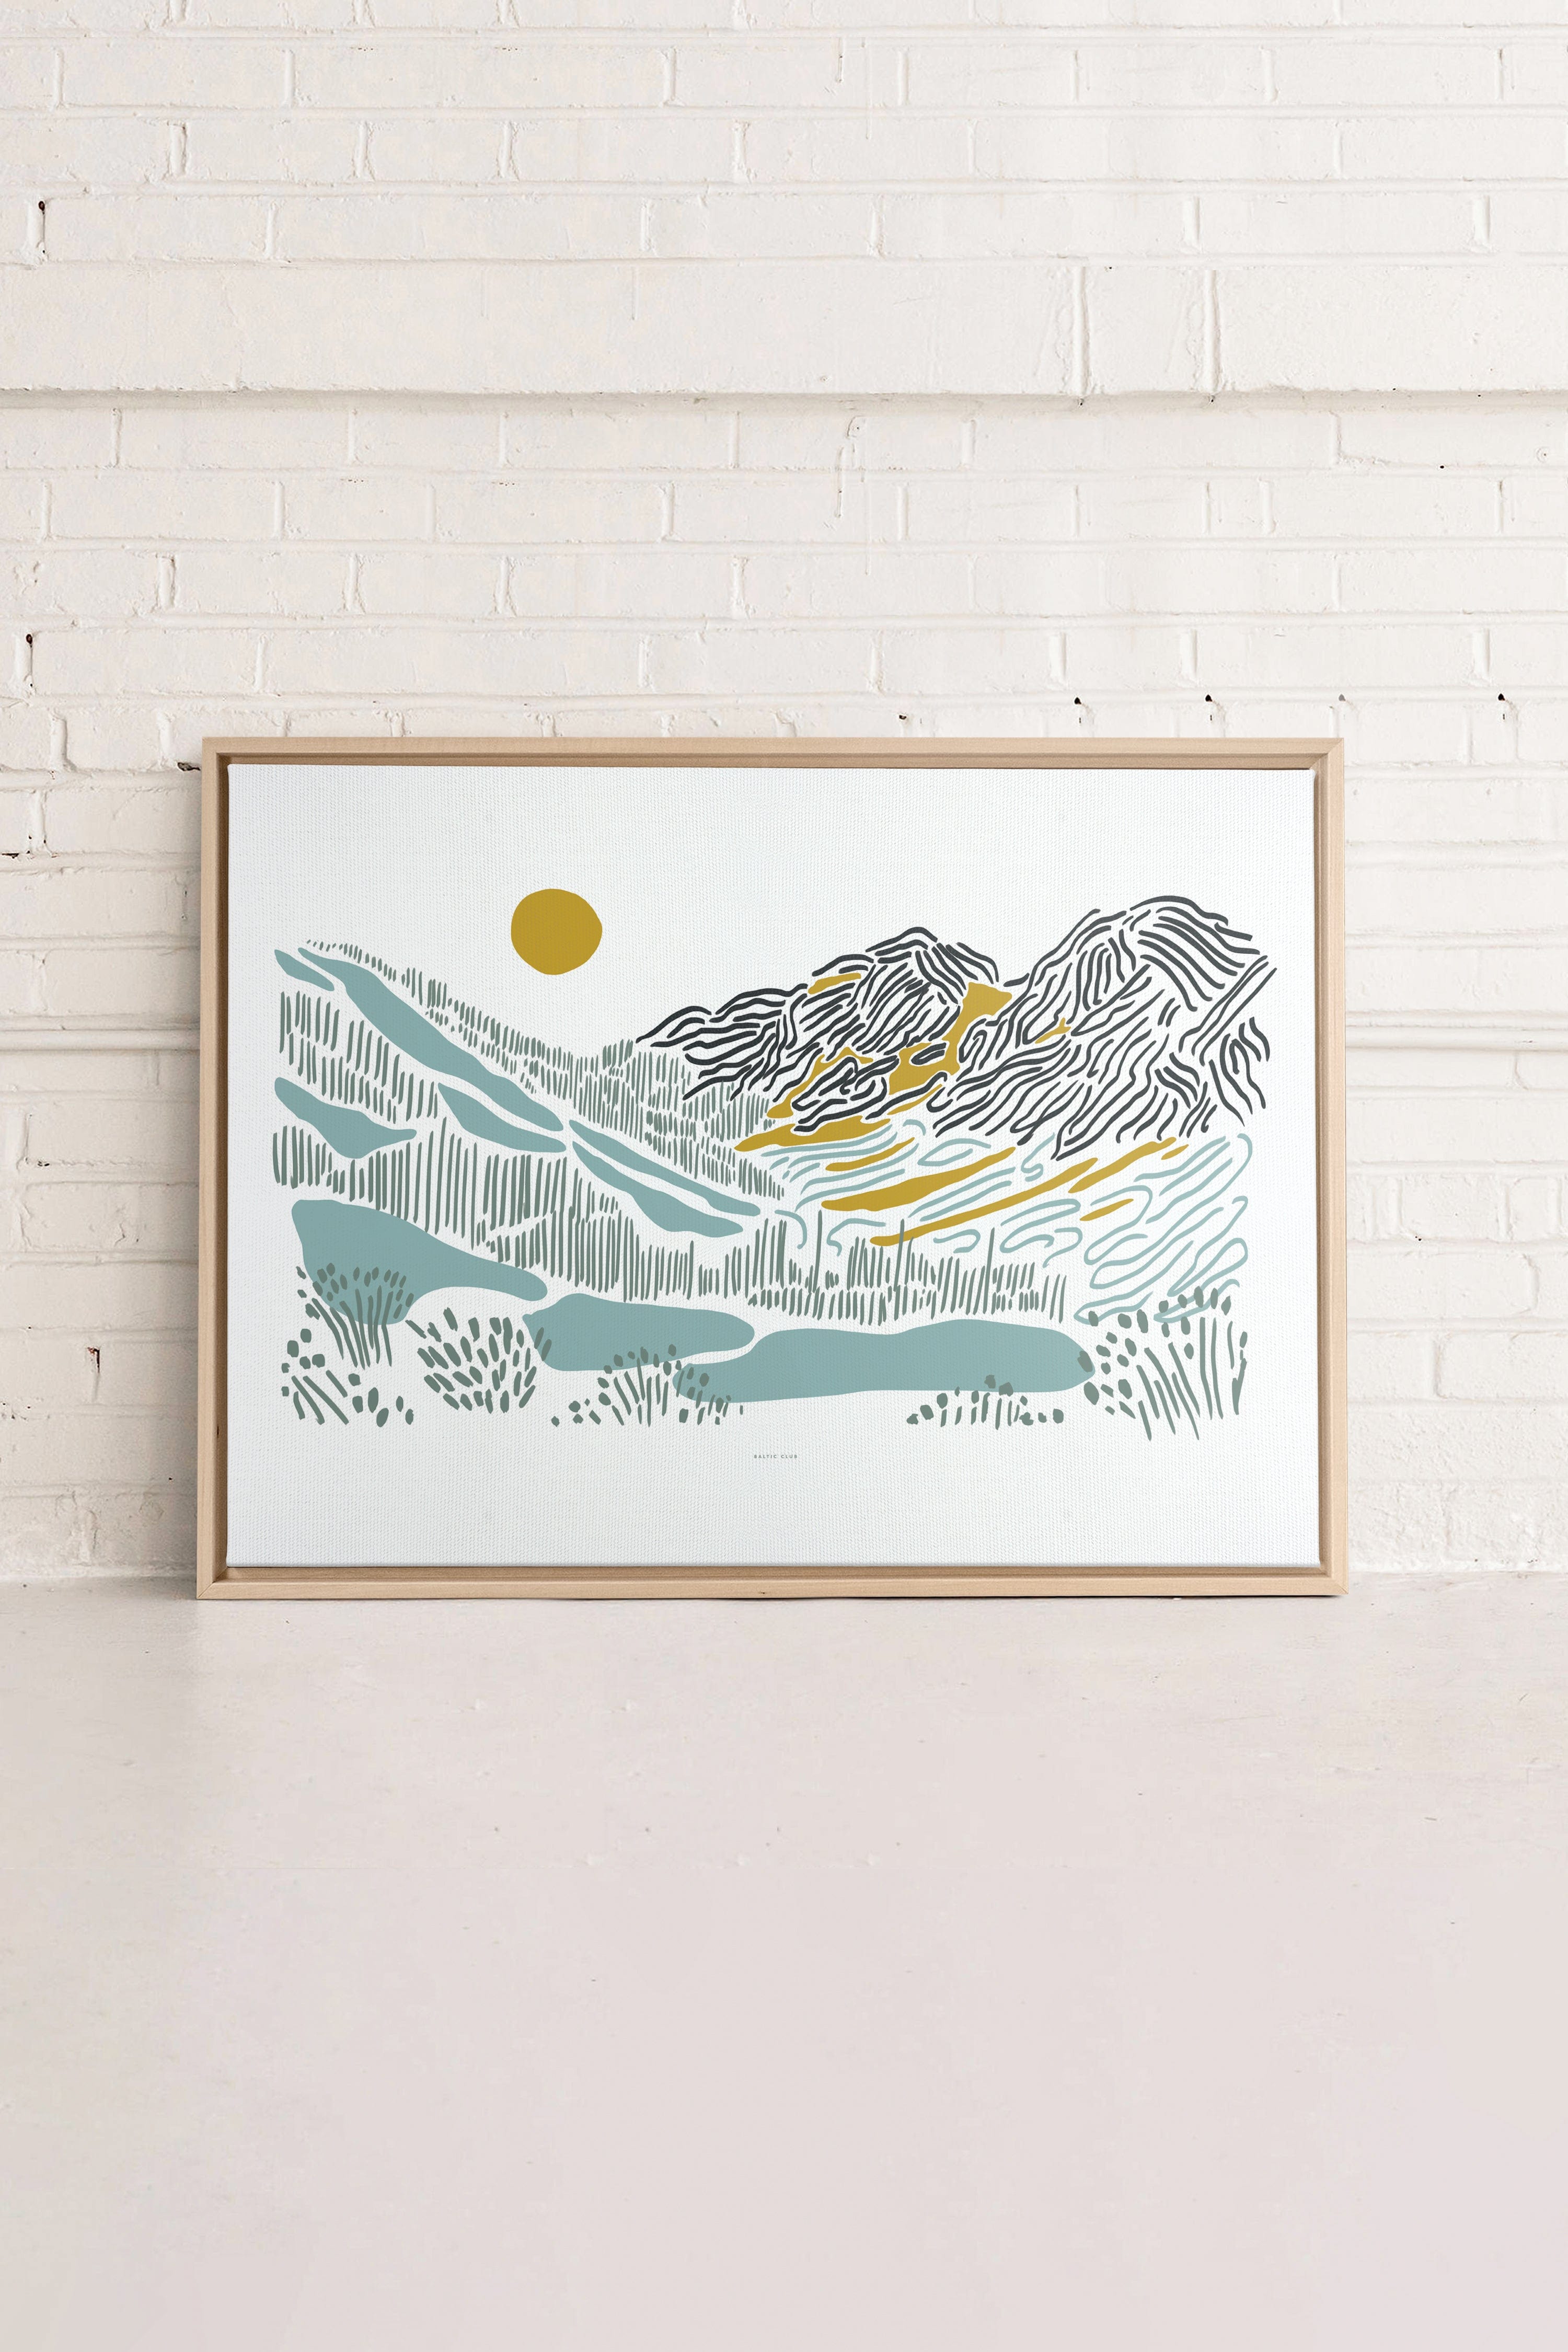 Cascades Mountain - Printed illustration on canvas